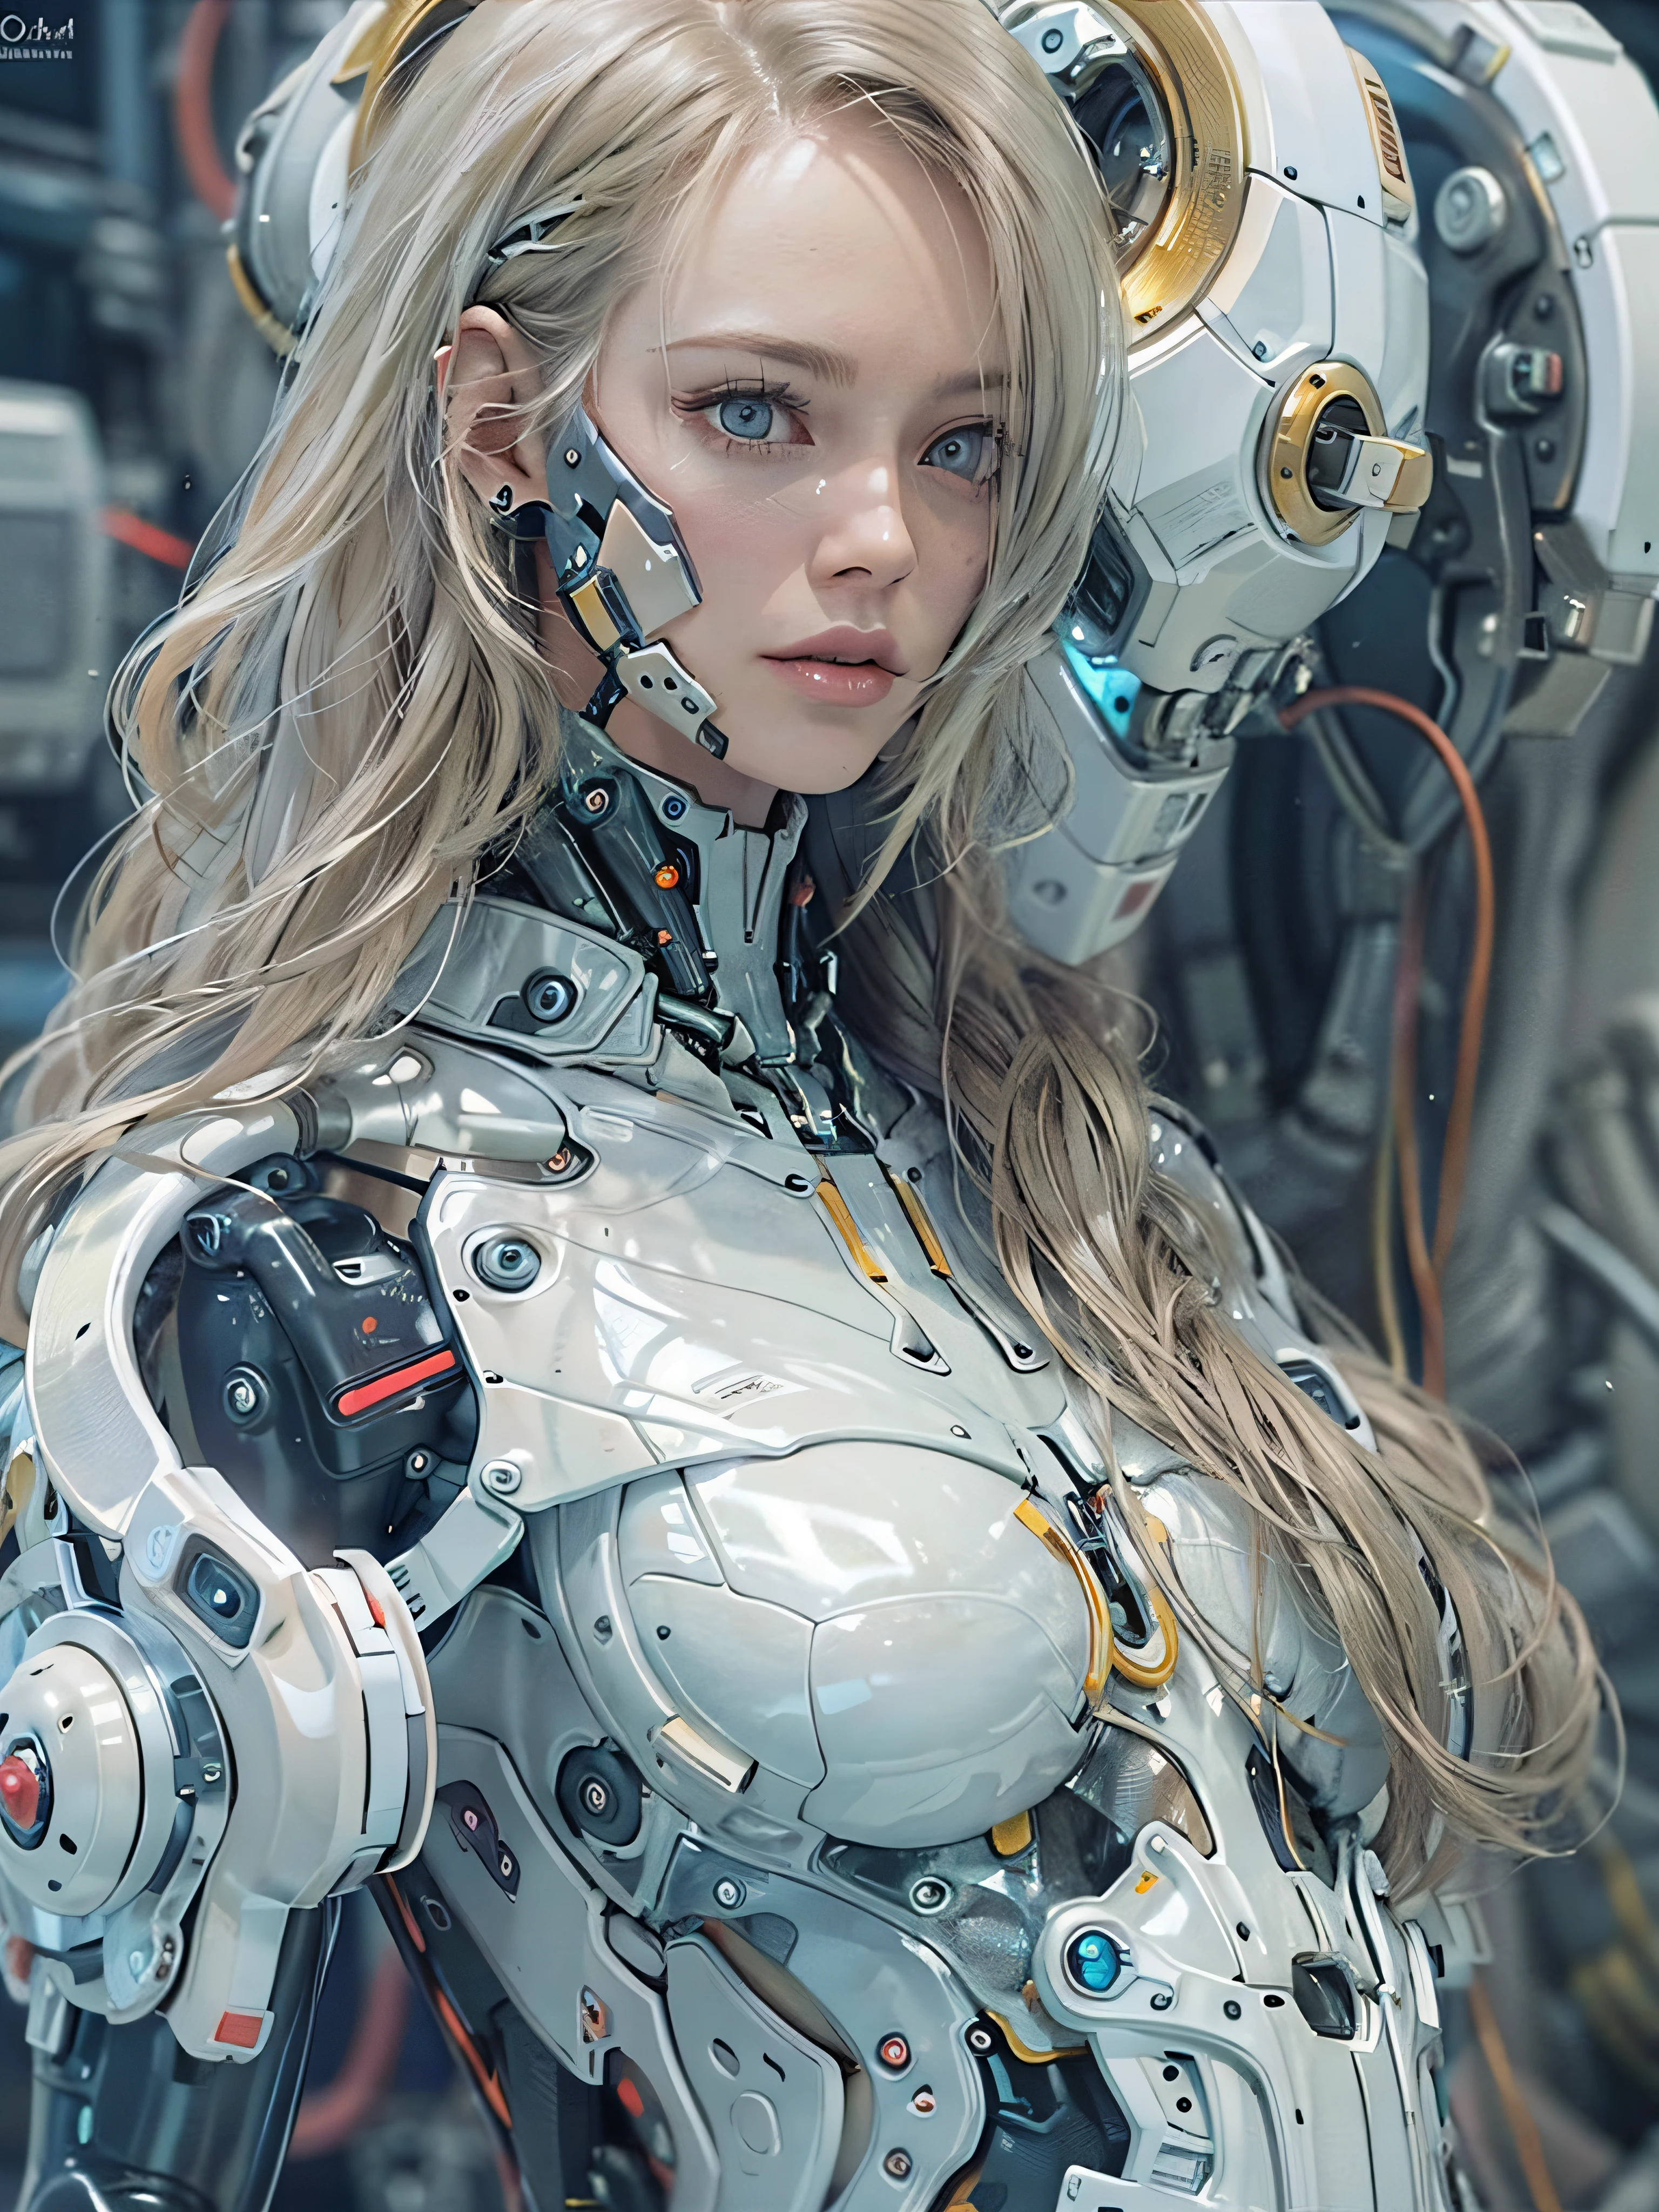 Complex 3d rendering porcelain female cyborg ultra 细节, 1女孩, 蓬松的金发, 长发, 小腰, (自然肌肤纹理, 实际的 eye 细节s: 1.2), 机器人零部件, 美丽柔和的灯光, 边缘光, vivid 细节s, 华丽的赛博朋克, hyper-实际的, 解剖的, 面部肌肉, 电缆线, 微芯片, 优雅美丽的背景, 辛烷值渲染, 苹果风格, 8千, 顶级品质, 杰作, 插图, 非常精致, CG, 统一, 墙纸, (实际的, photo实际的: 1.2), 惊人的, 细节, 杰作, 最好的质量, 官方艺术, highly 细节ed cg Unity 8k 墙纸, 荒谬至极, 性感机器人, 机械骨架, 安卓, 超现实主义, 末日荒原, (高科技假肢:1.2), 完美身材, 深蓝色发光网络容器, (闪亮的身体), (Very 闪亮的身体), 響鳴_泰科特, 瑞尔机甲, 控制论的_无颌, 机械零件, 控制论的s, AB_ 机器人